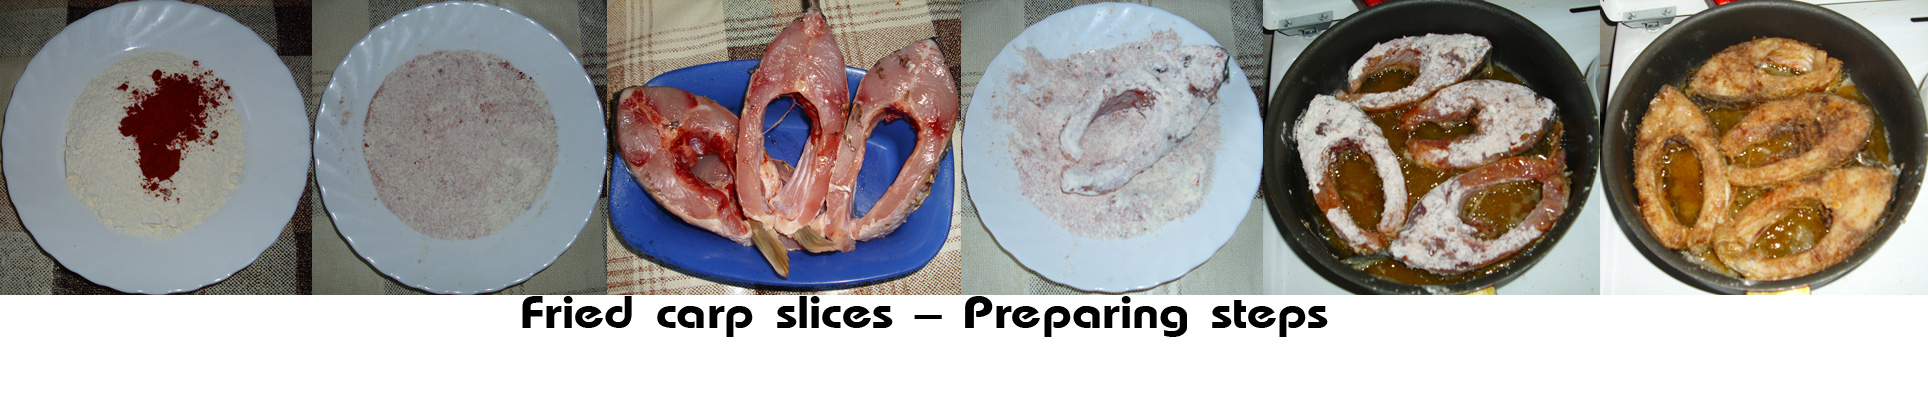 Fried carp fish slices - Preparing steps